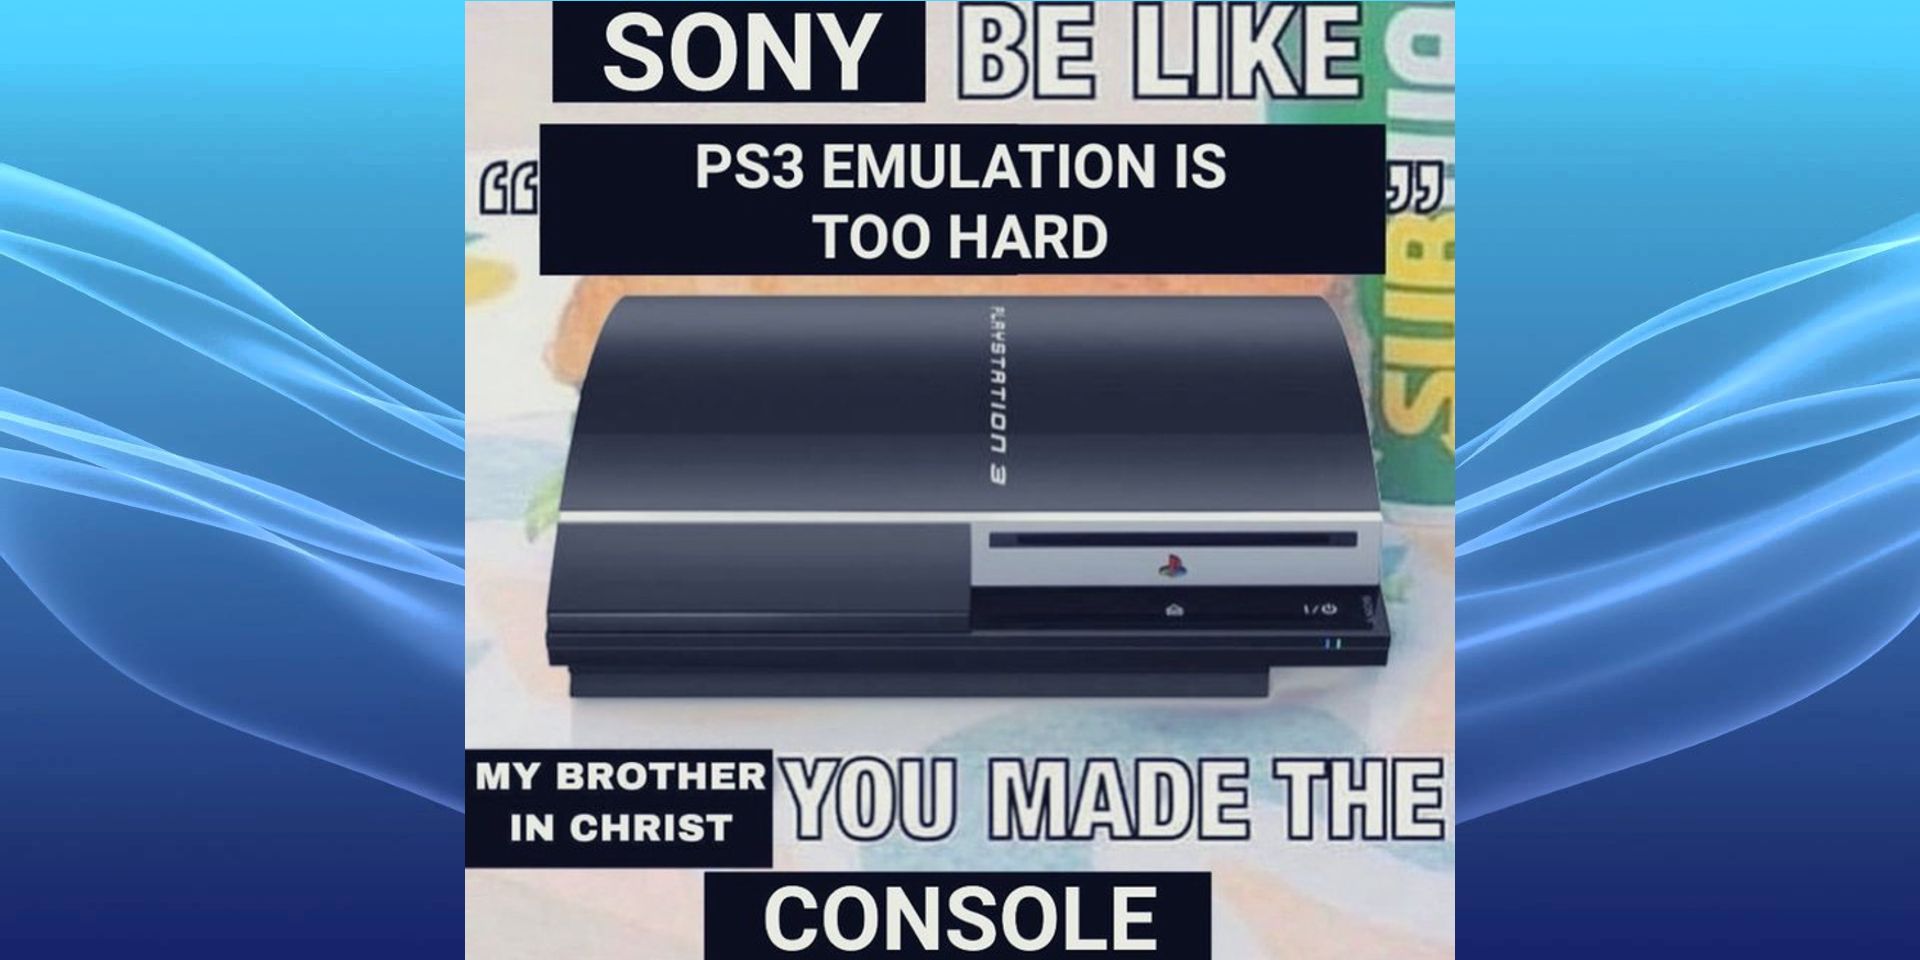 A meme about PlayStation 3 emulation.